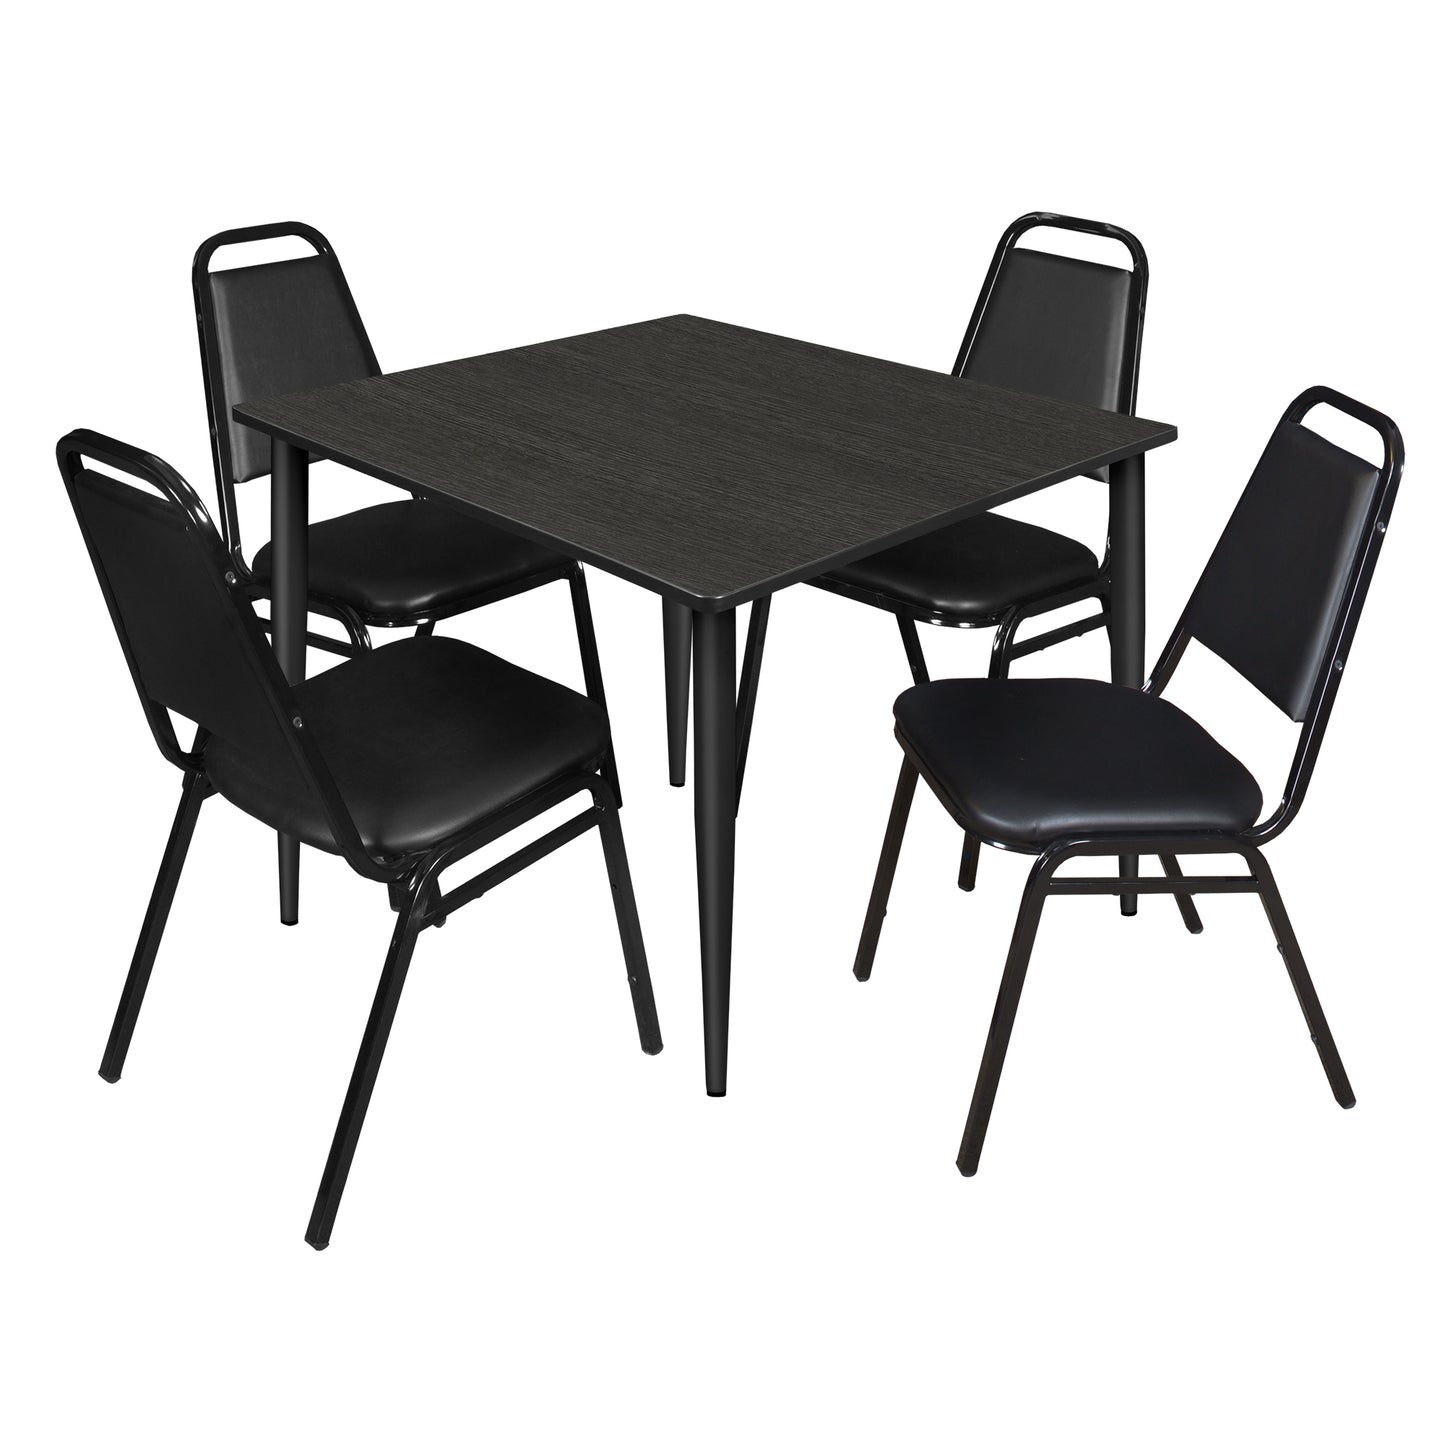 Regency Kahlo 48 in. Square Breakroom Table& 4 Restaurant Stack Chairs - Black